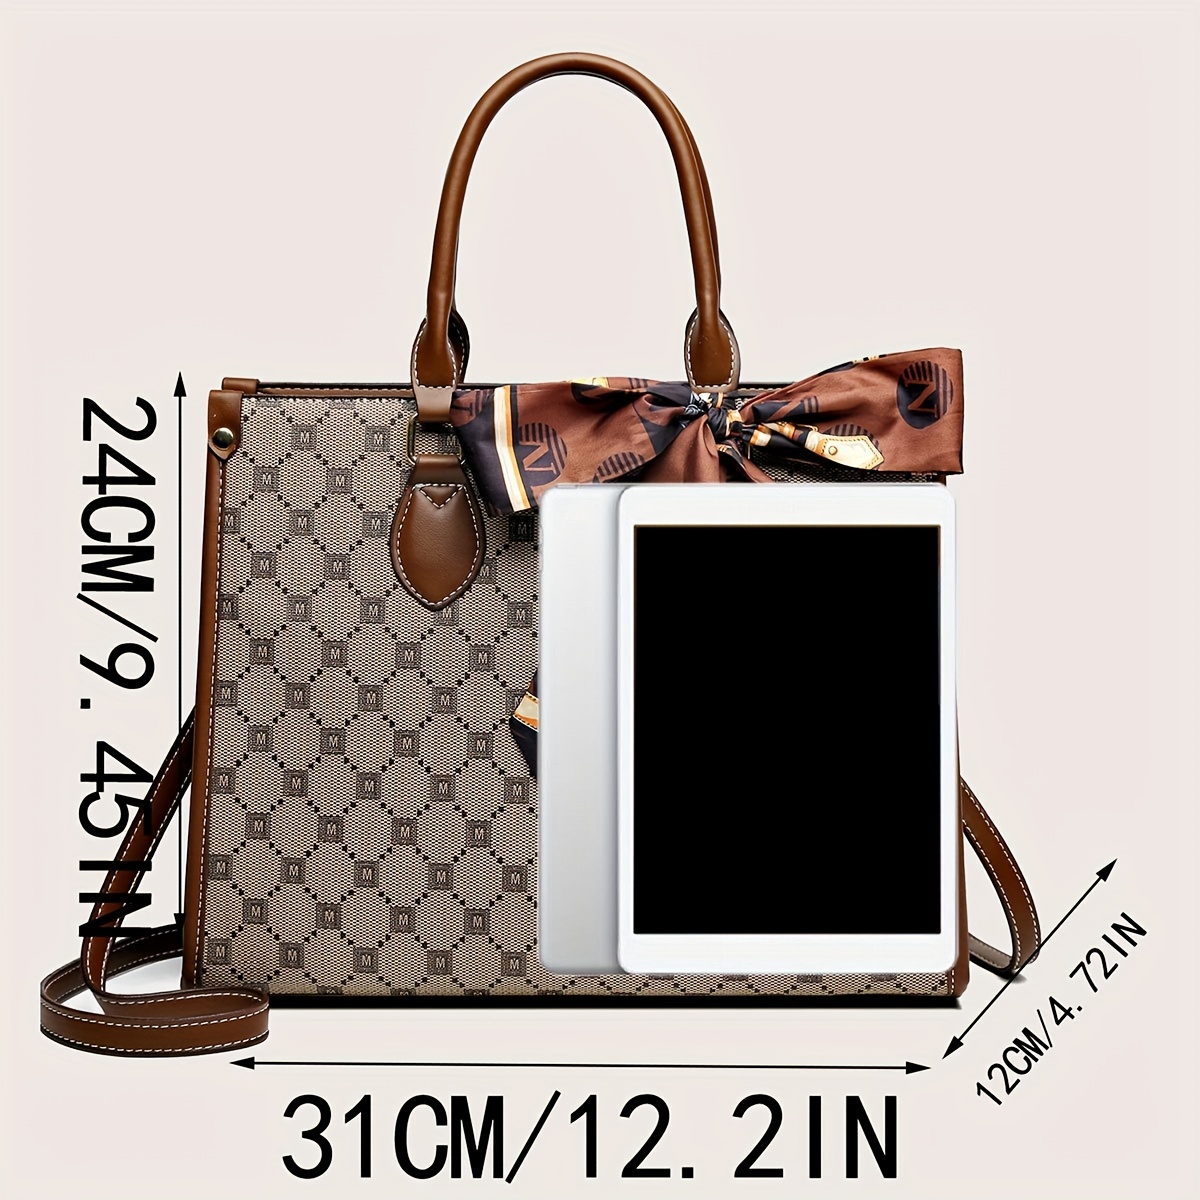 Gucci GG Supreme Large Gusset Tote Bag, Brown